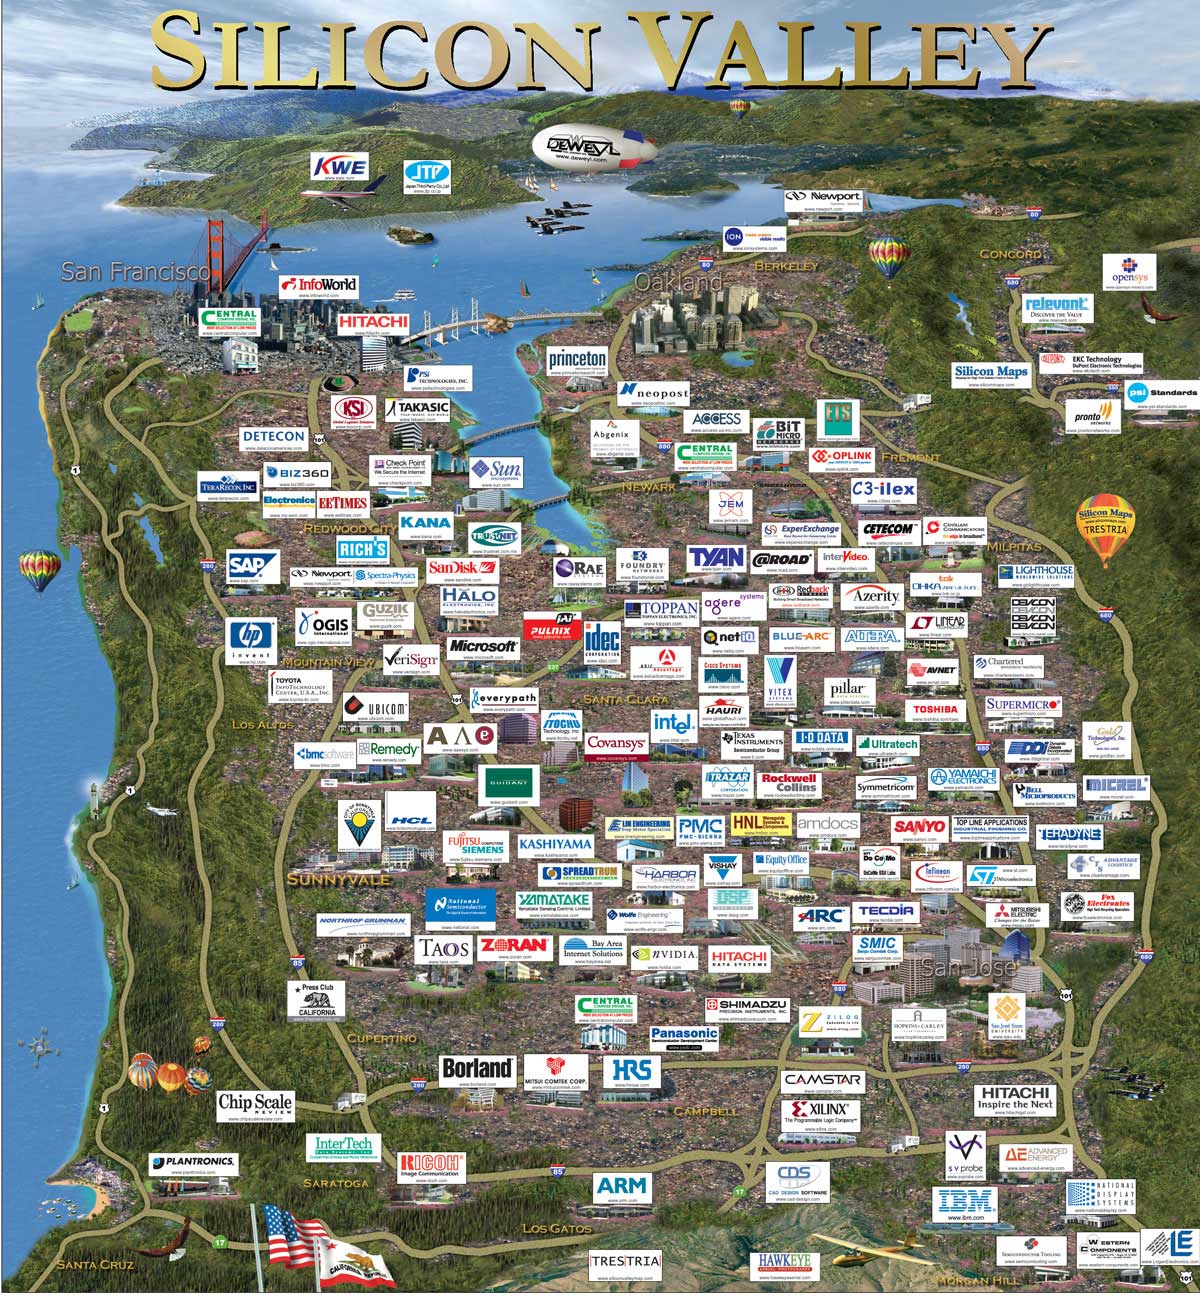 Silicon Valley(地名)